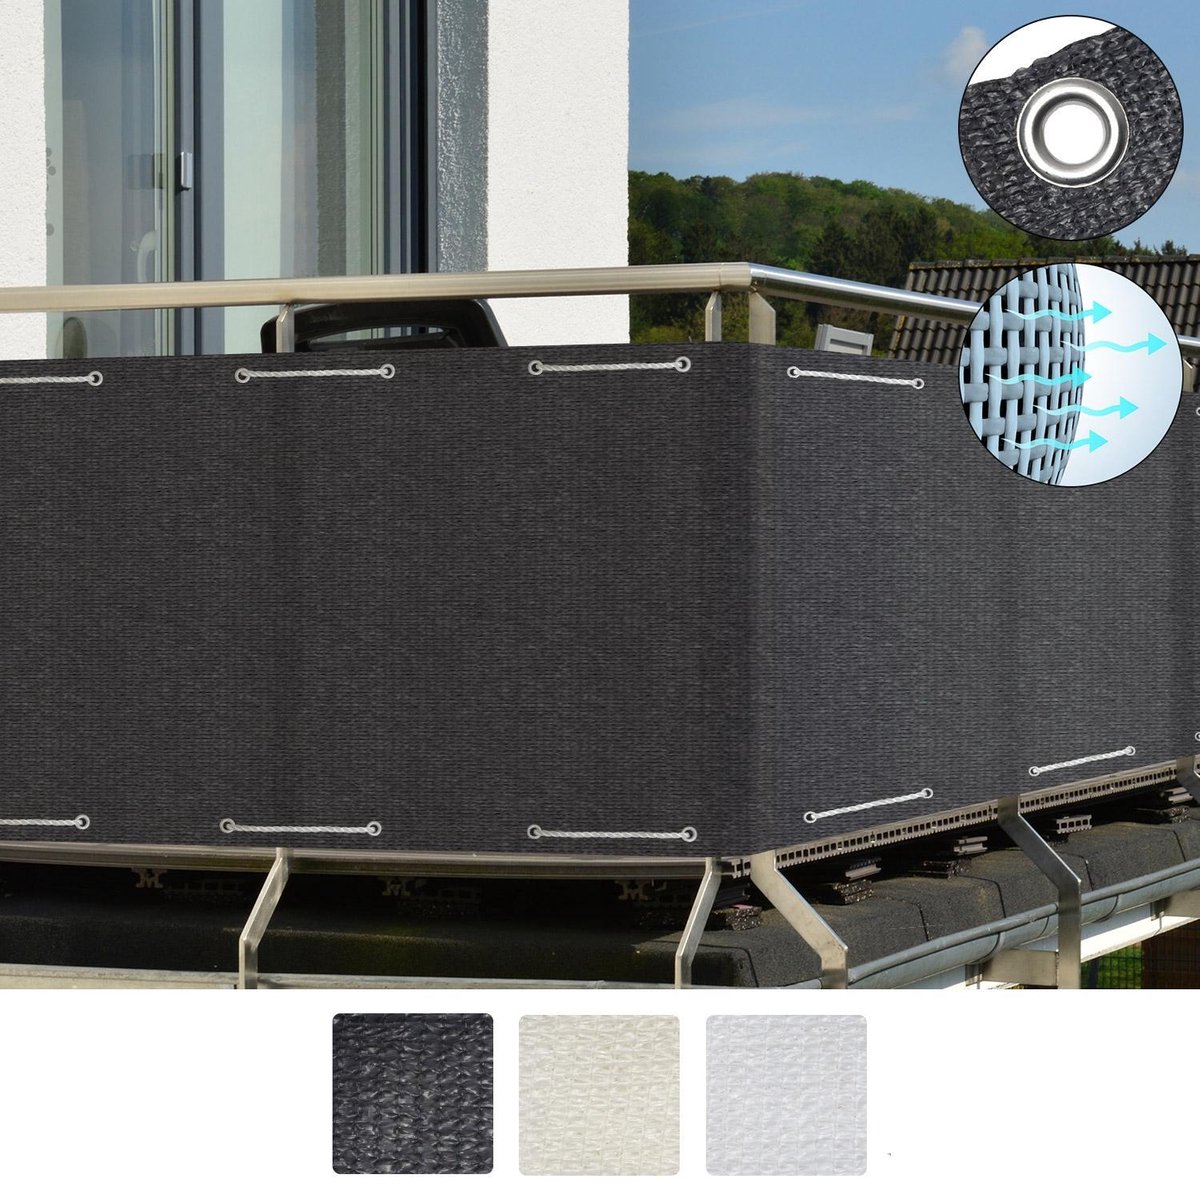 Sol Royal balkonscherm – antraciet 90x500cm - balkondoek luchtdoorlatend - Solvision HB2